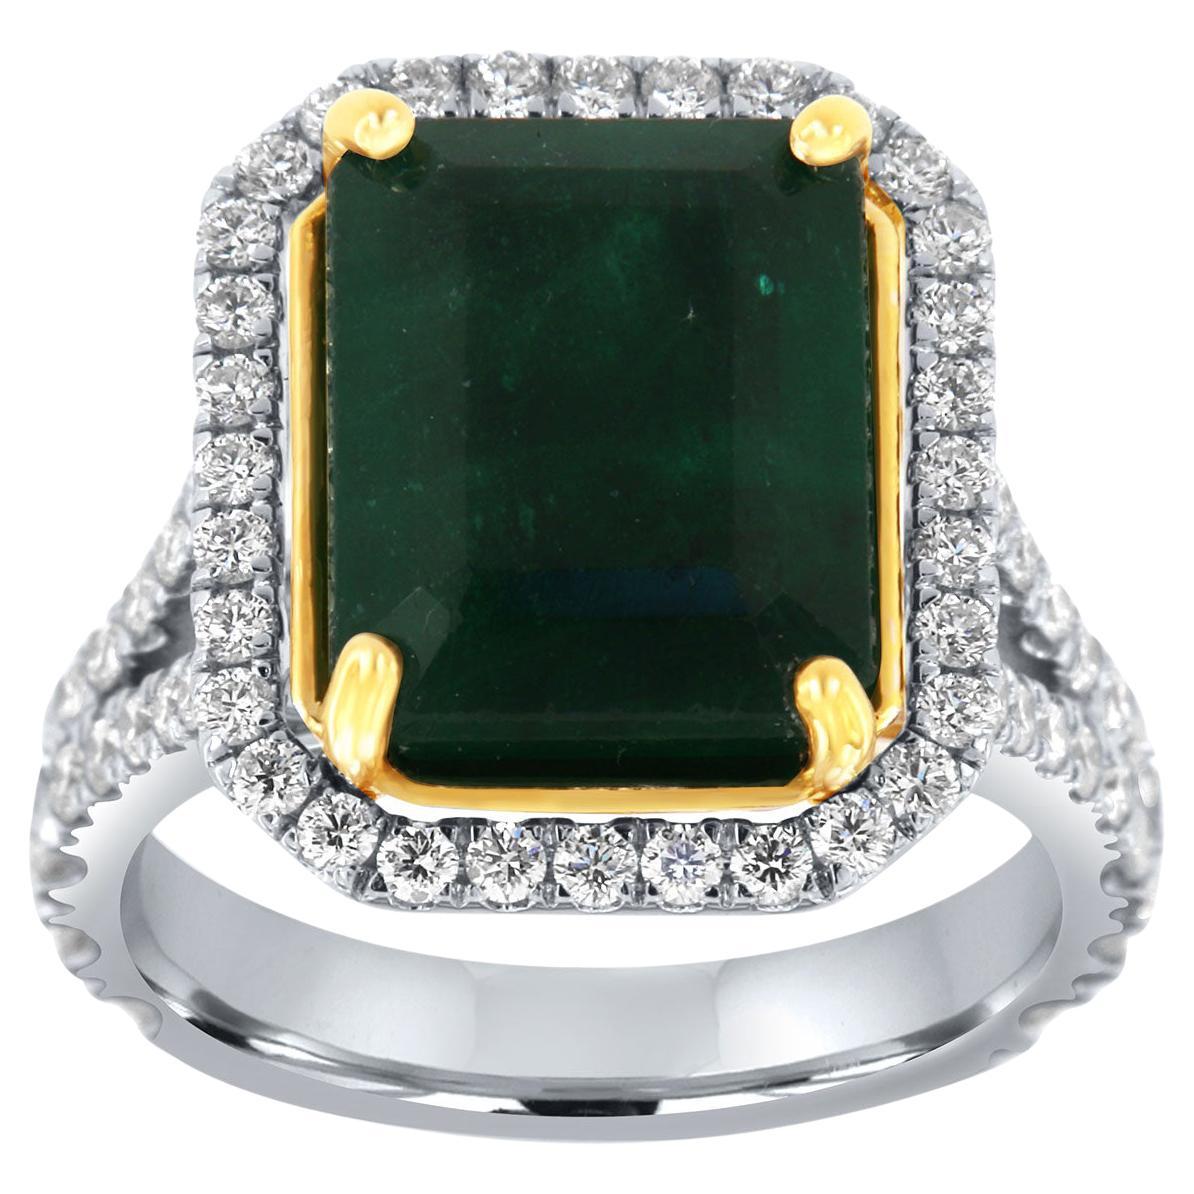 18K White & Yellow Gold GIA Certified 6.82 Carat Green Emerald Halo Diamond Ring